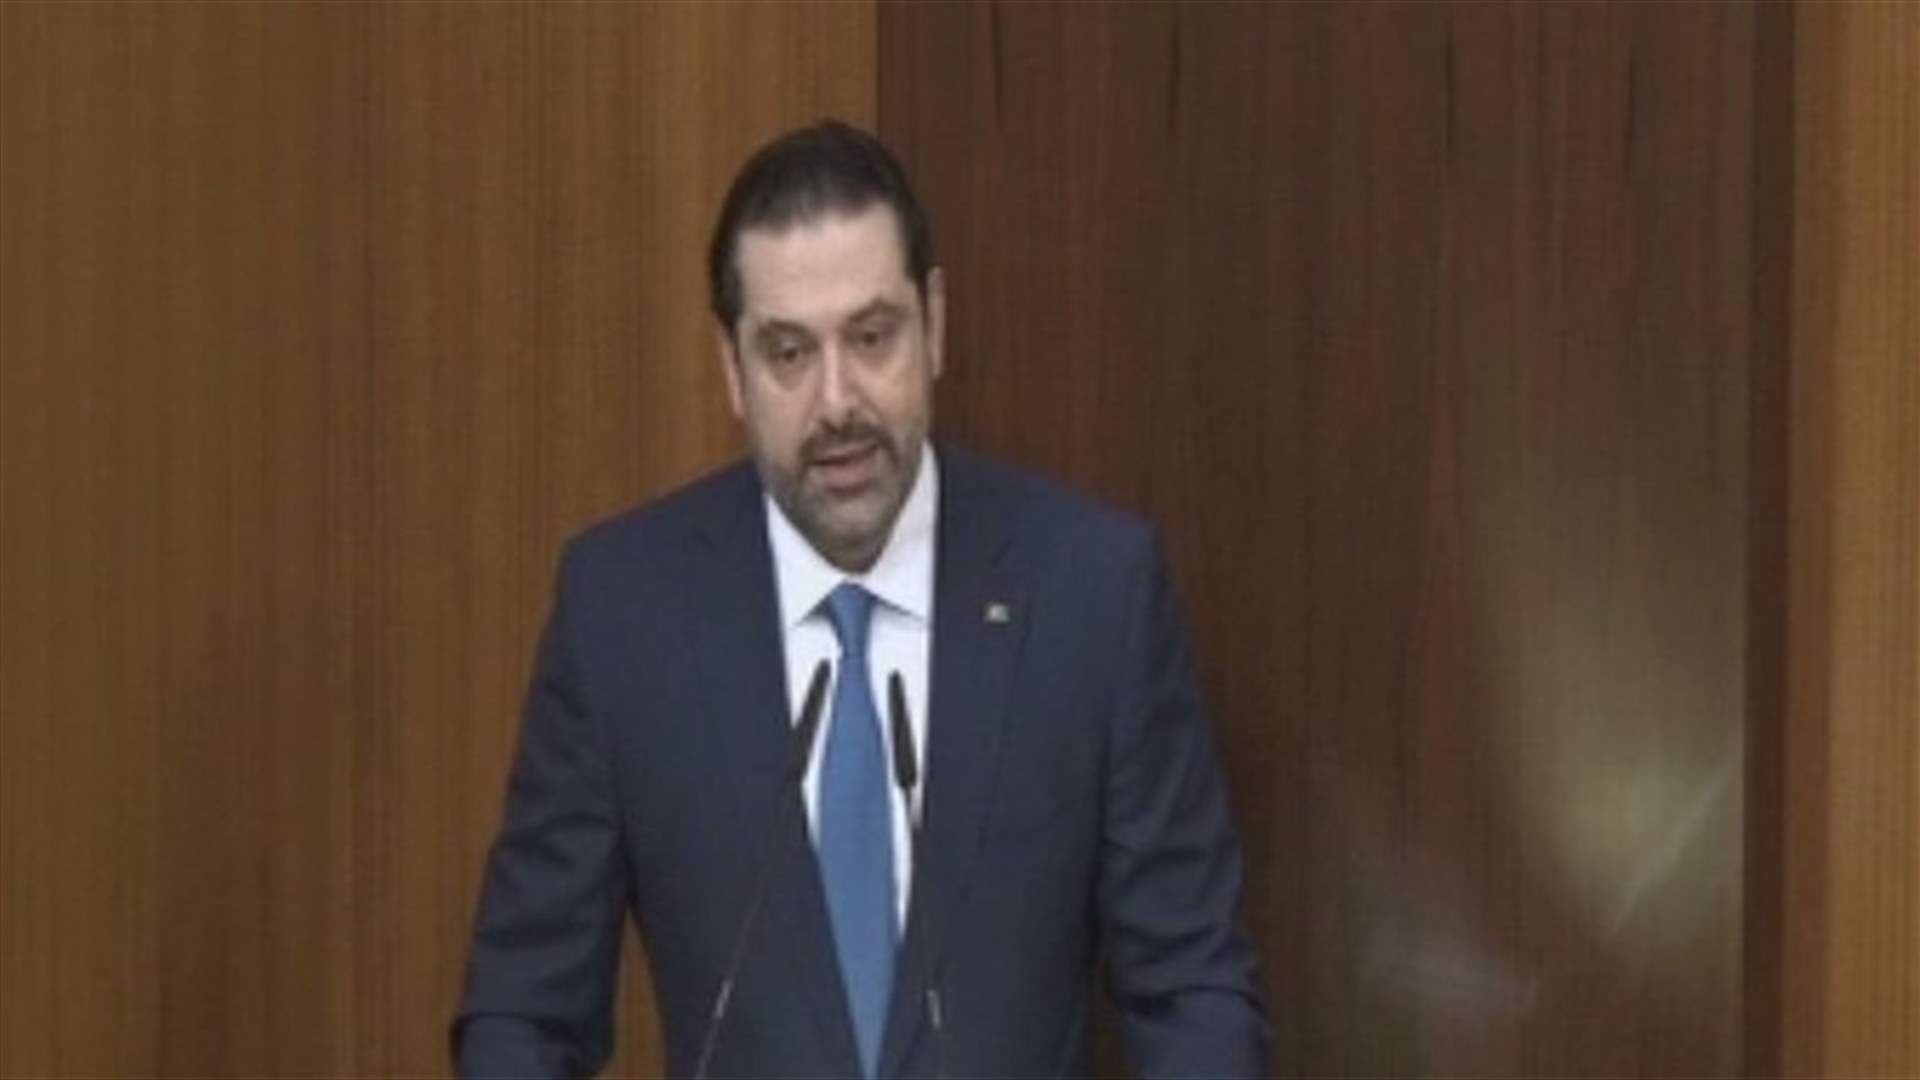 PM Hariri says cabinet wants to restore people’s trust 